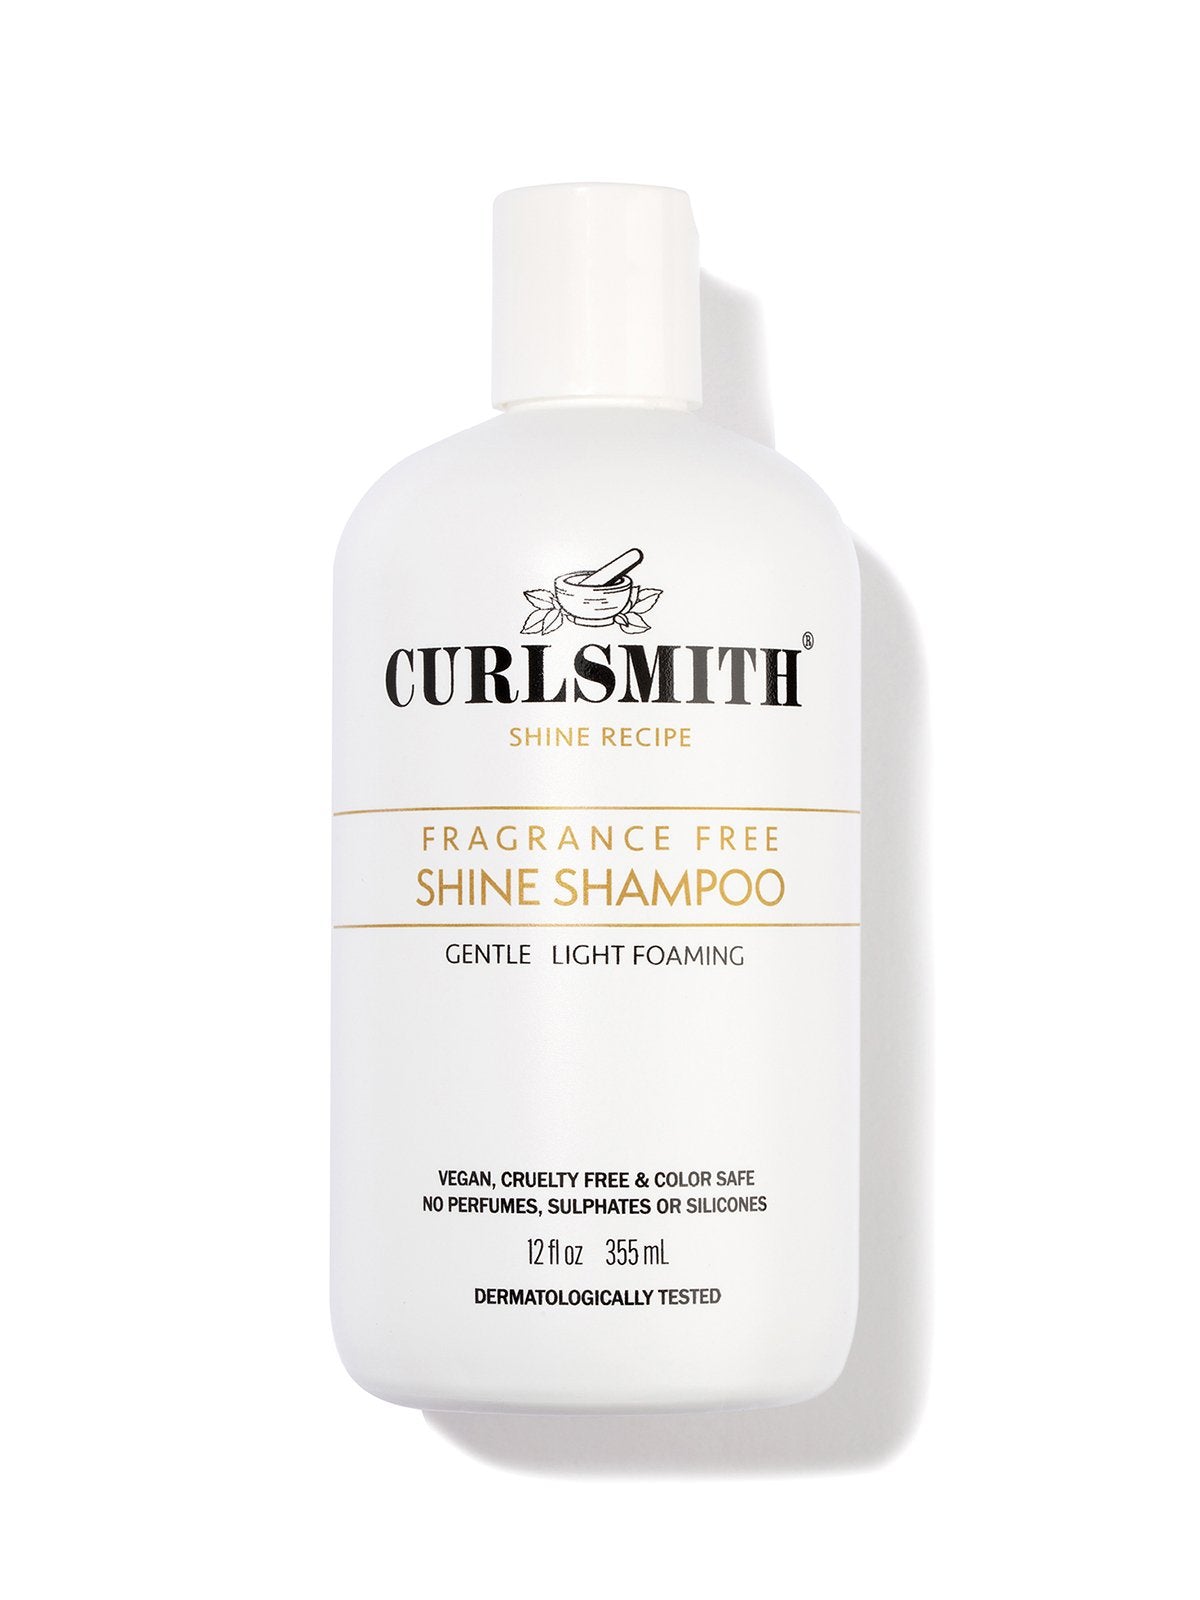 Curlsmith Shine Shampoo